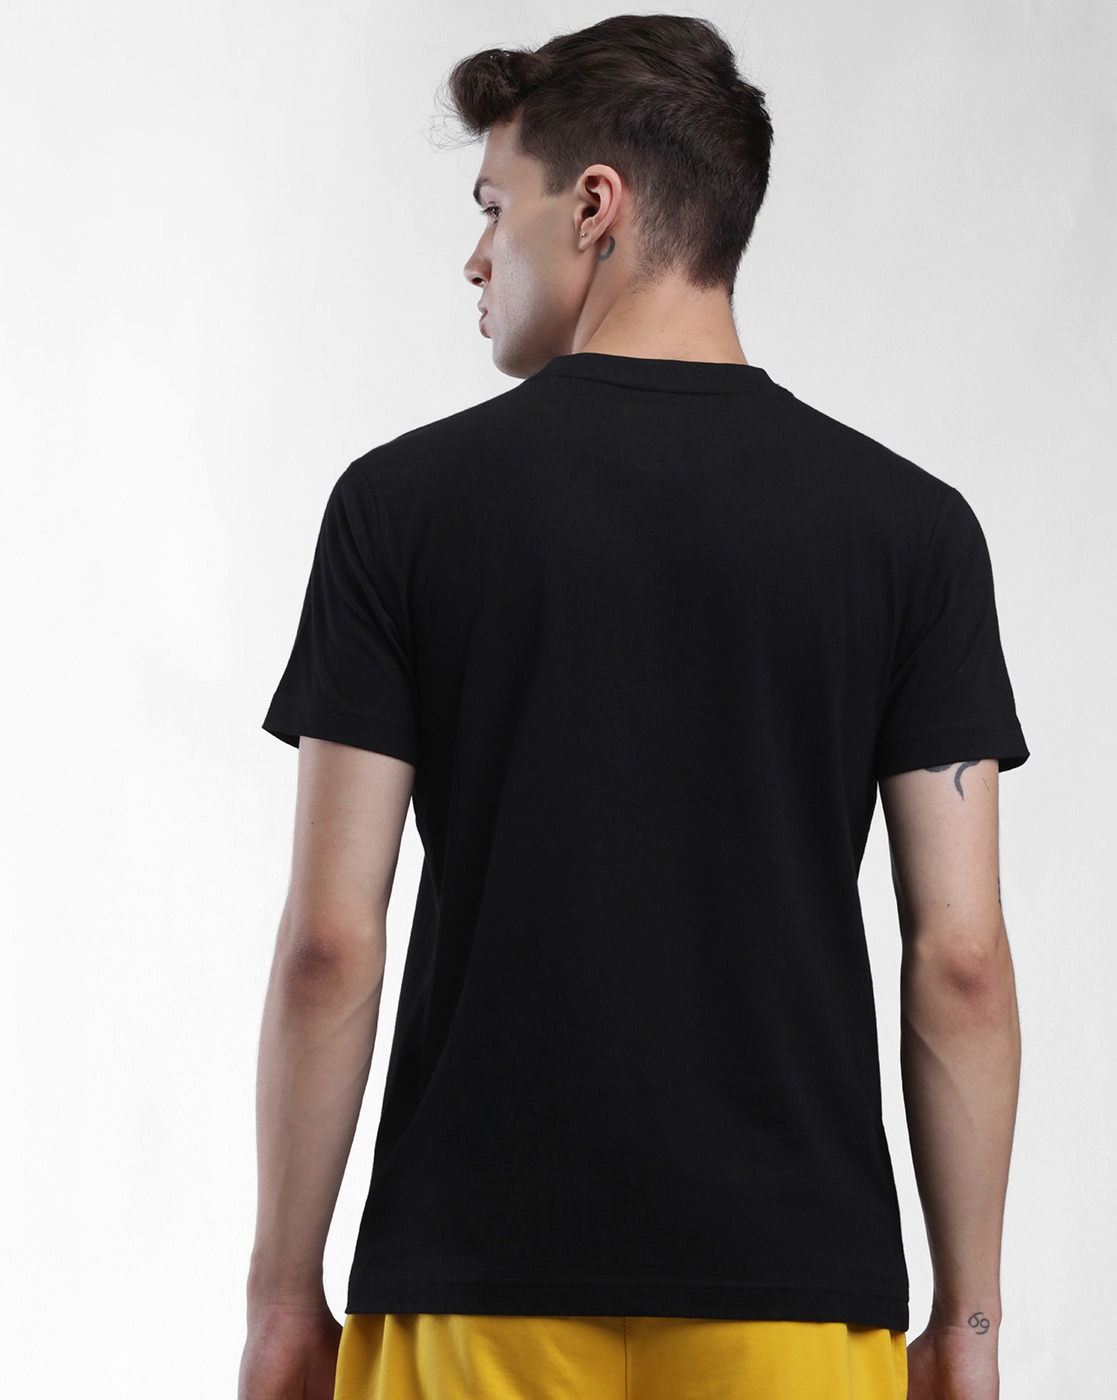 Starter Men's T-Shirt - Black - XL